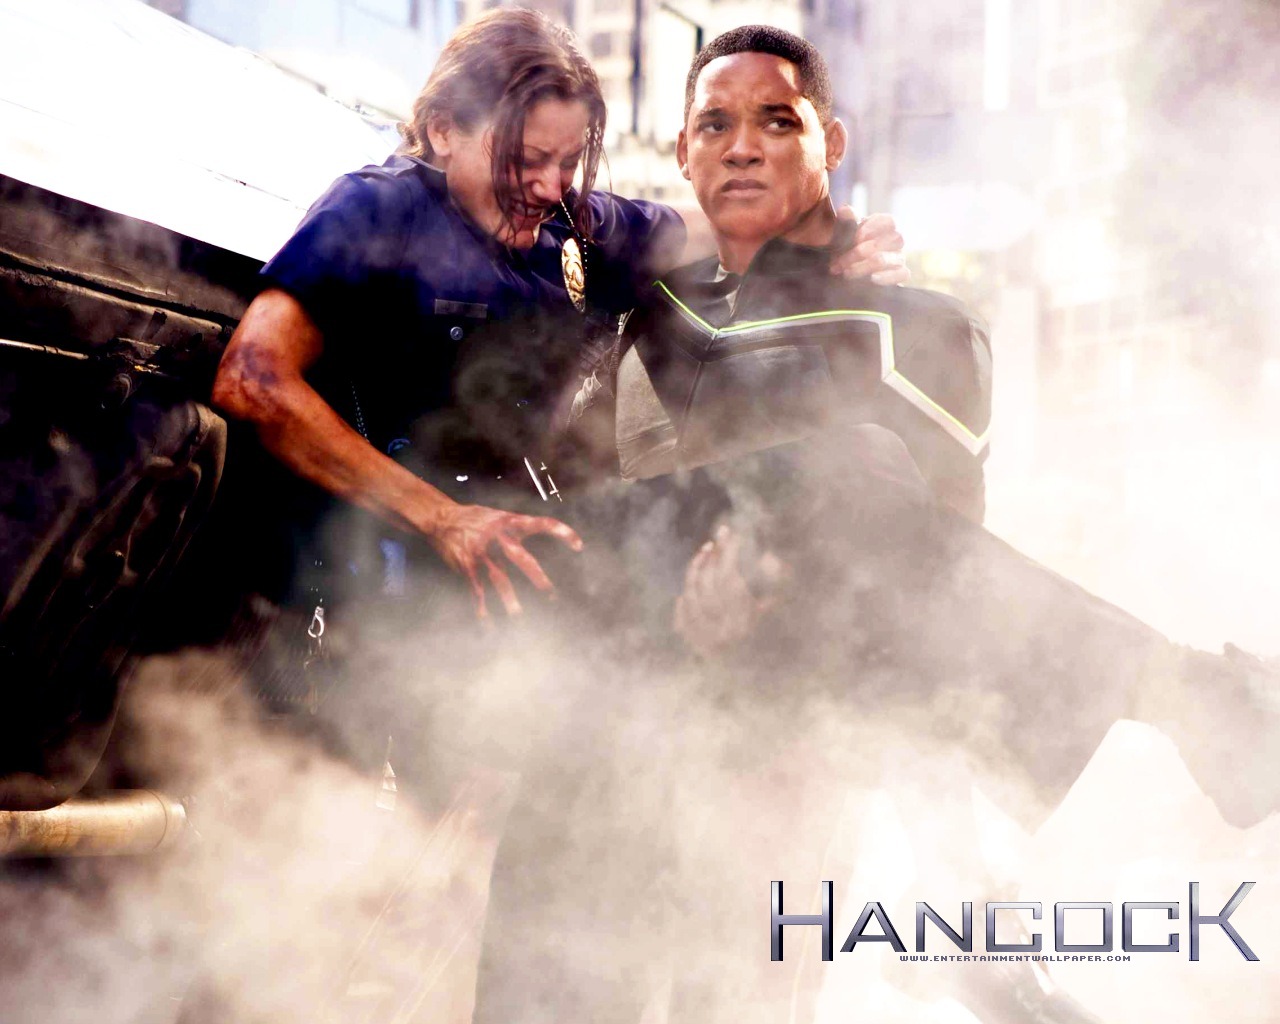 Hancock - Hancock Movie Female Cop - HD Wallpaper 